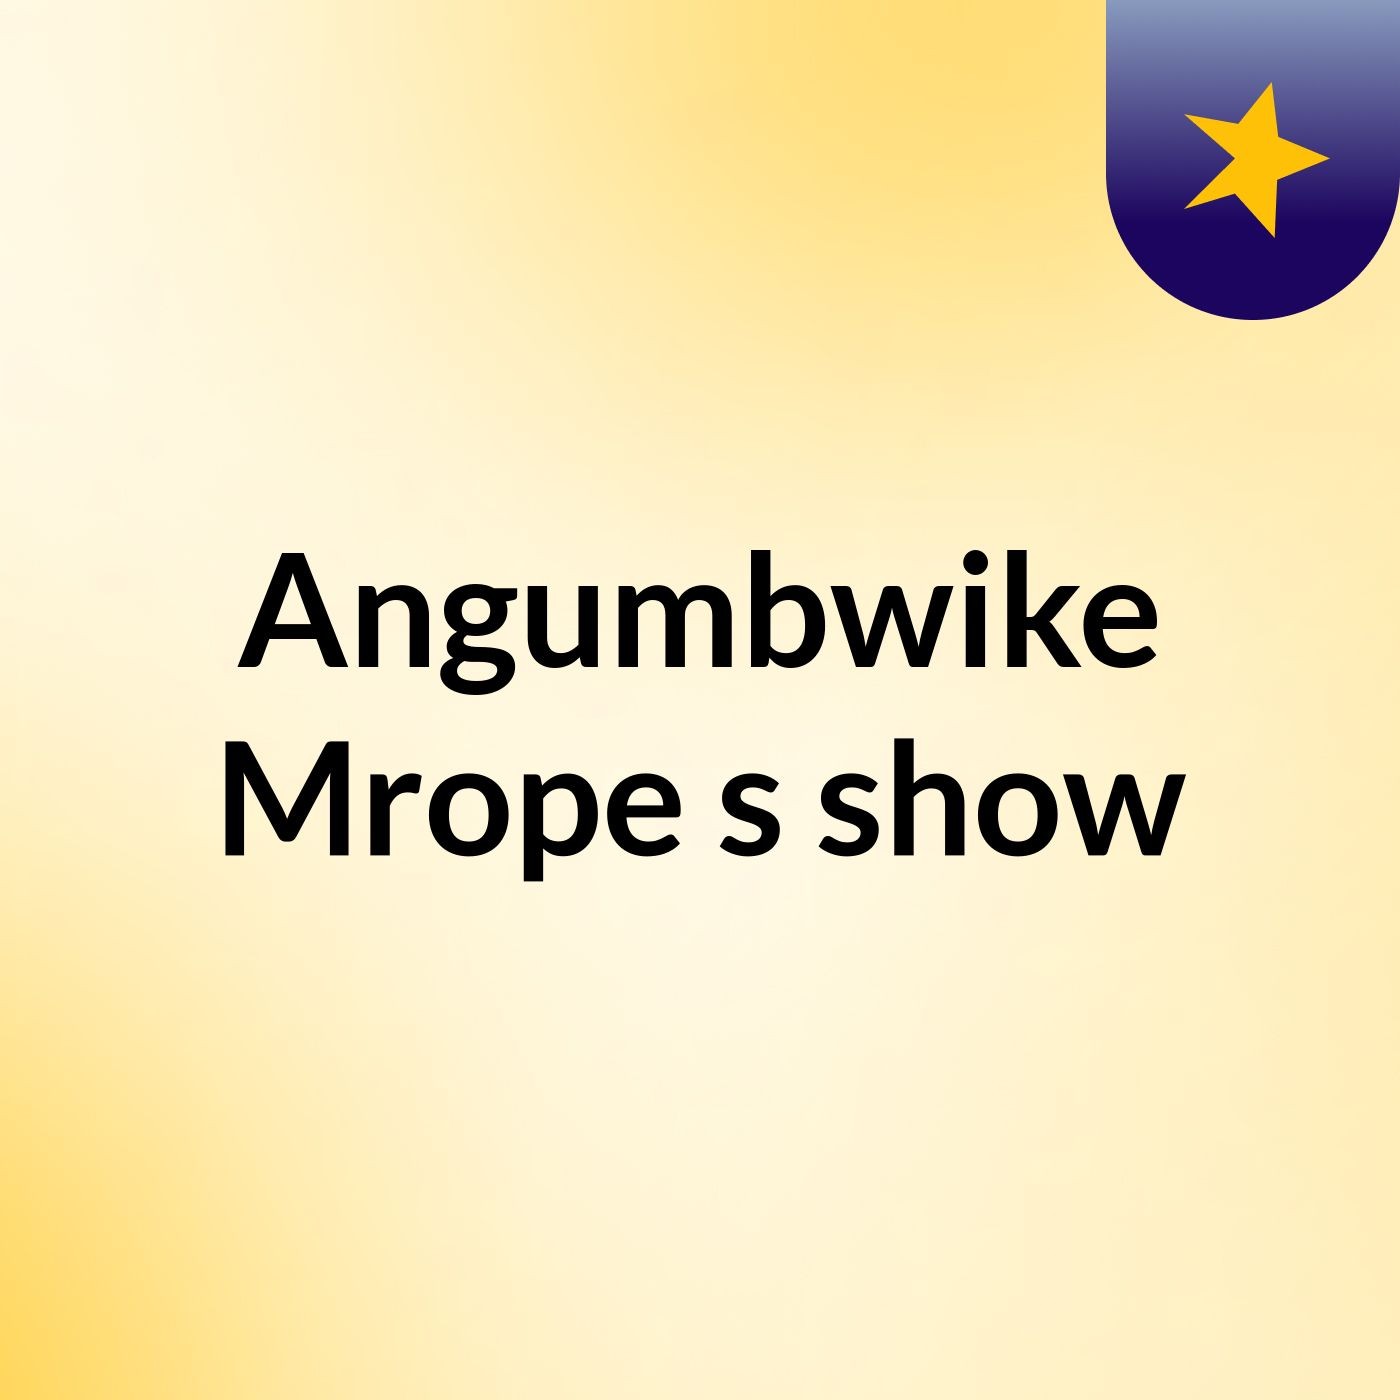 Angumbwike Mrope's show